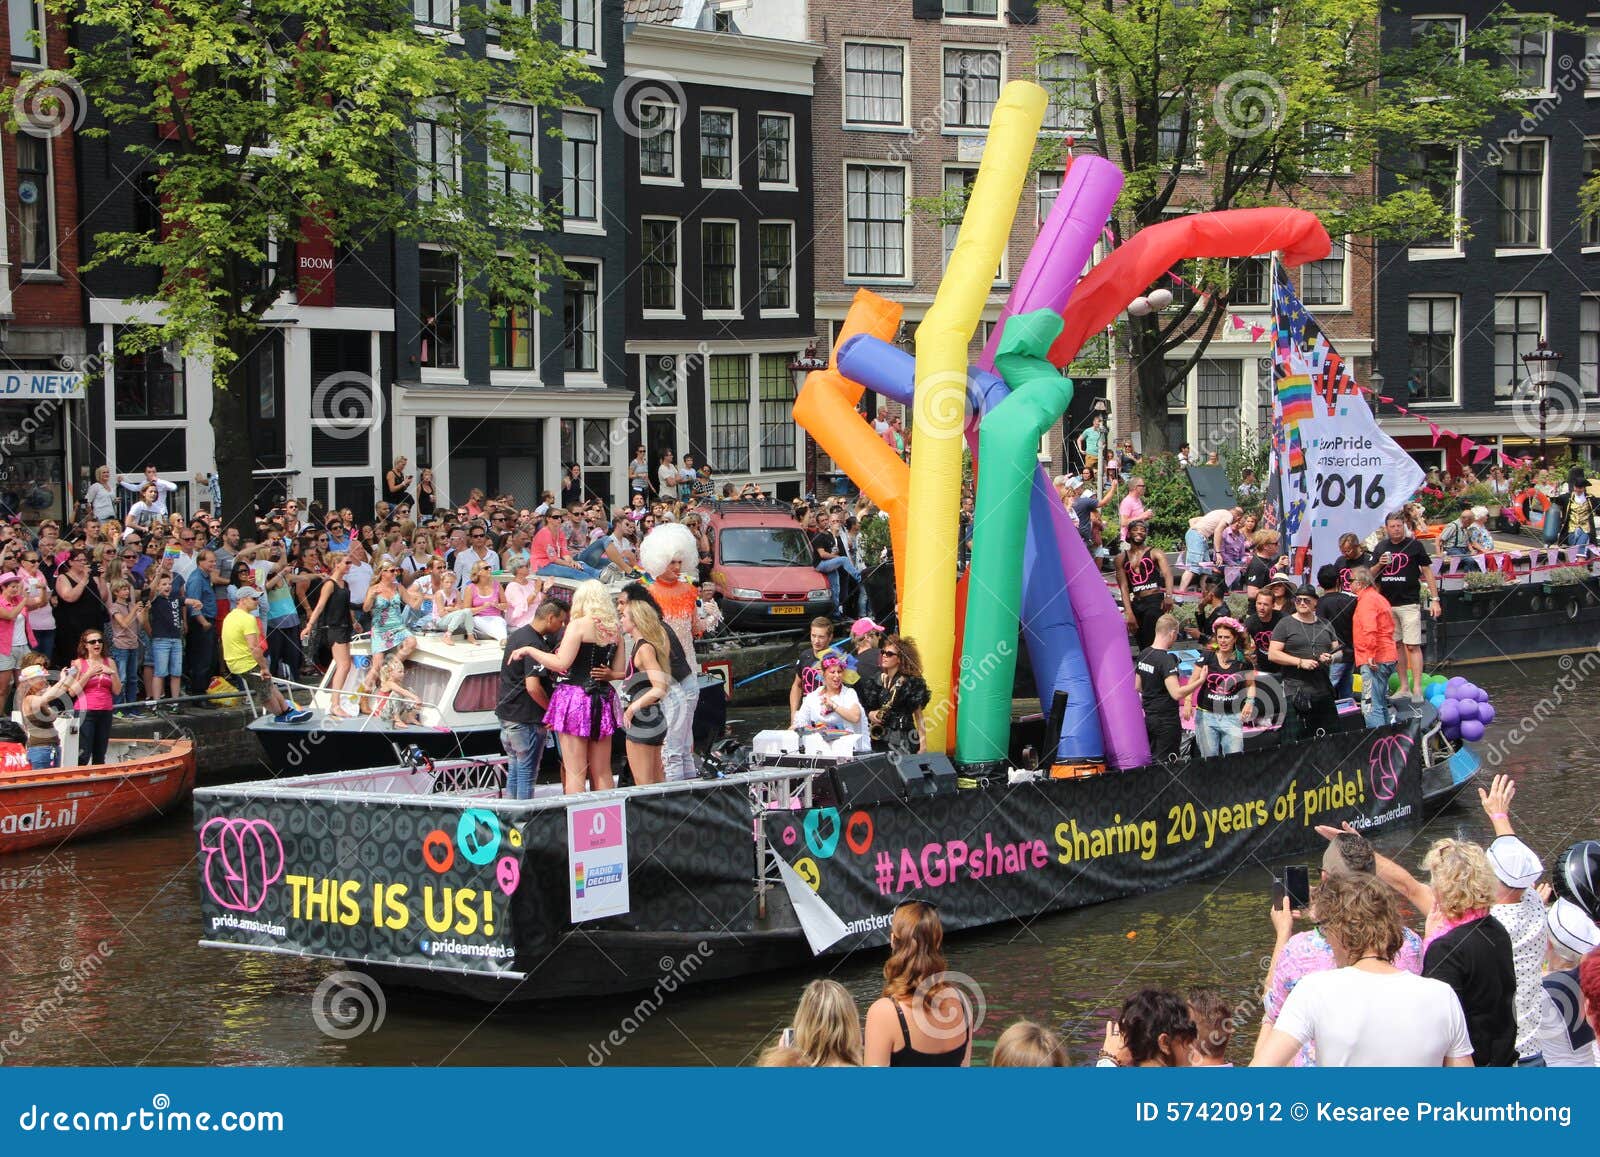 Amsterdam Gay Pride Canal Parade Editorial Photography Image Of Parade Lesbian 57420912